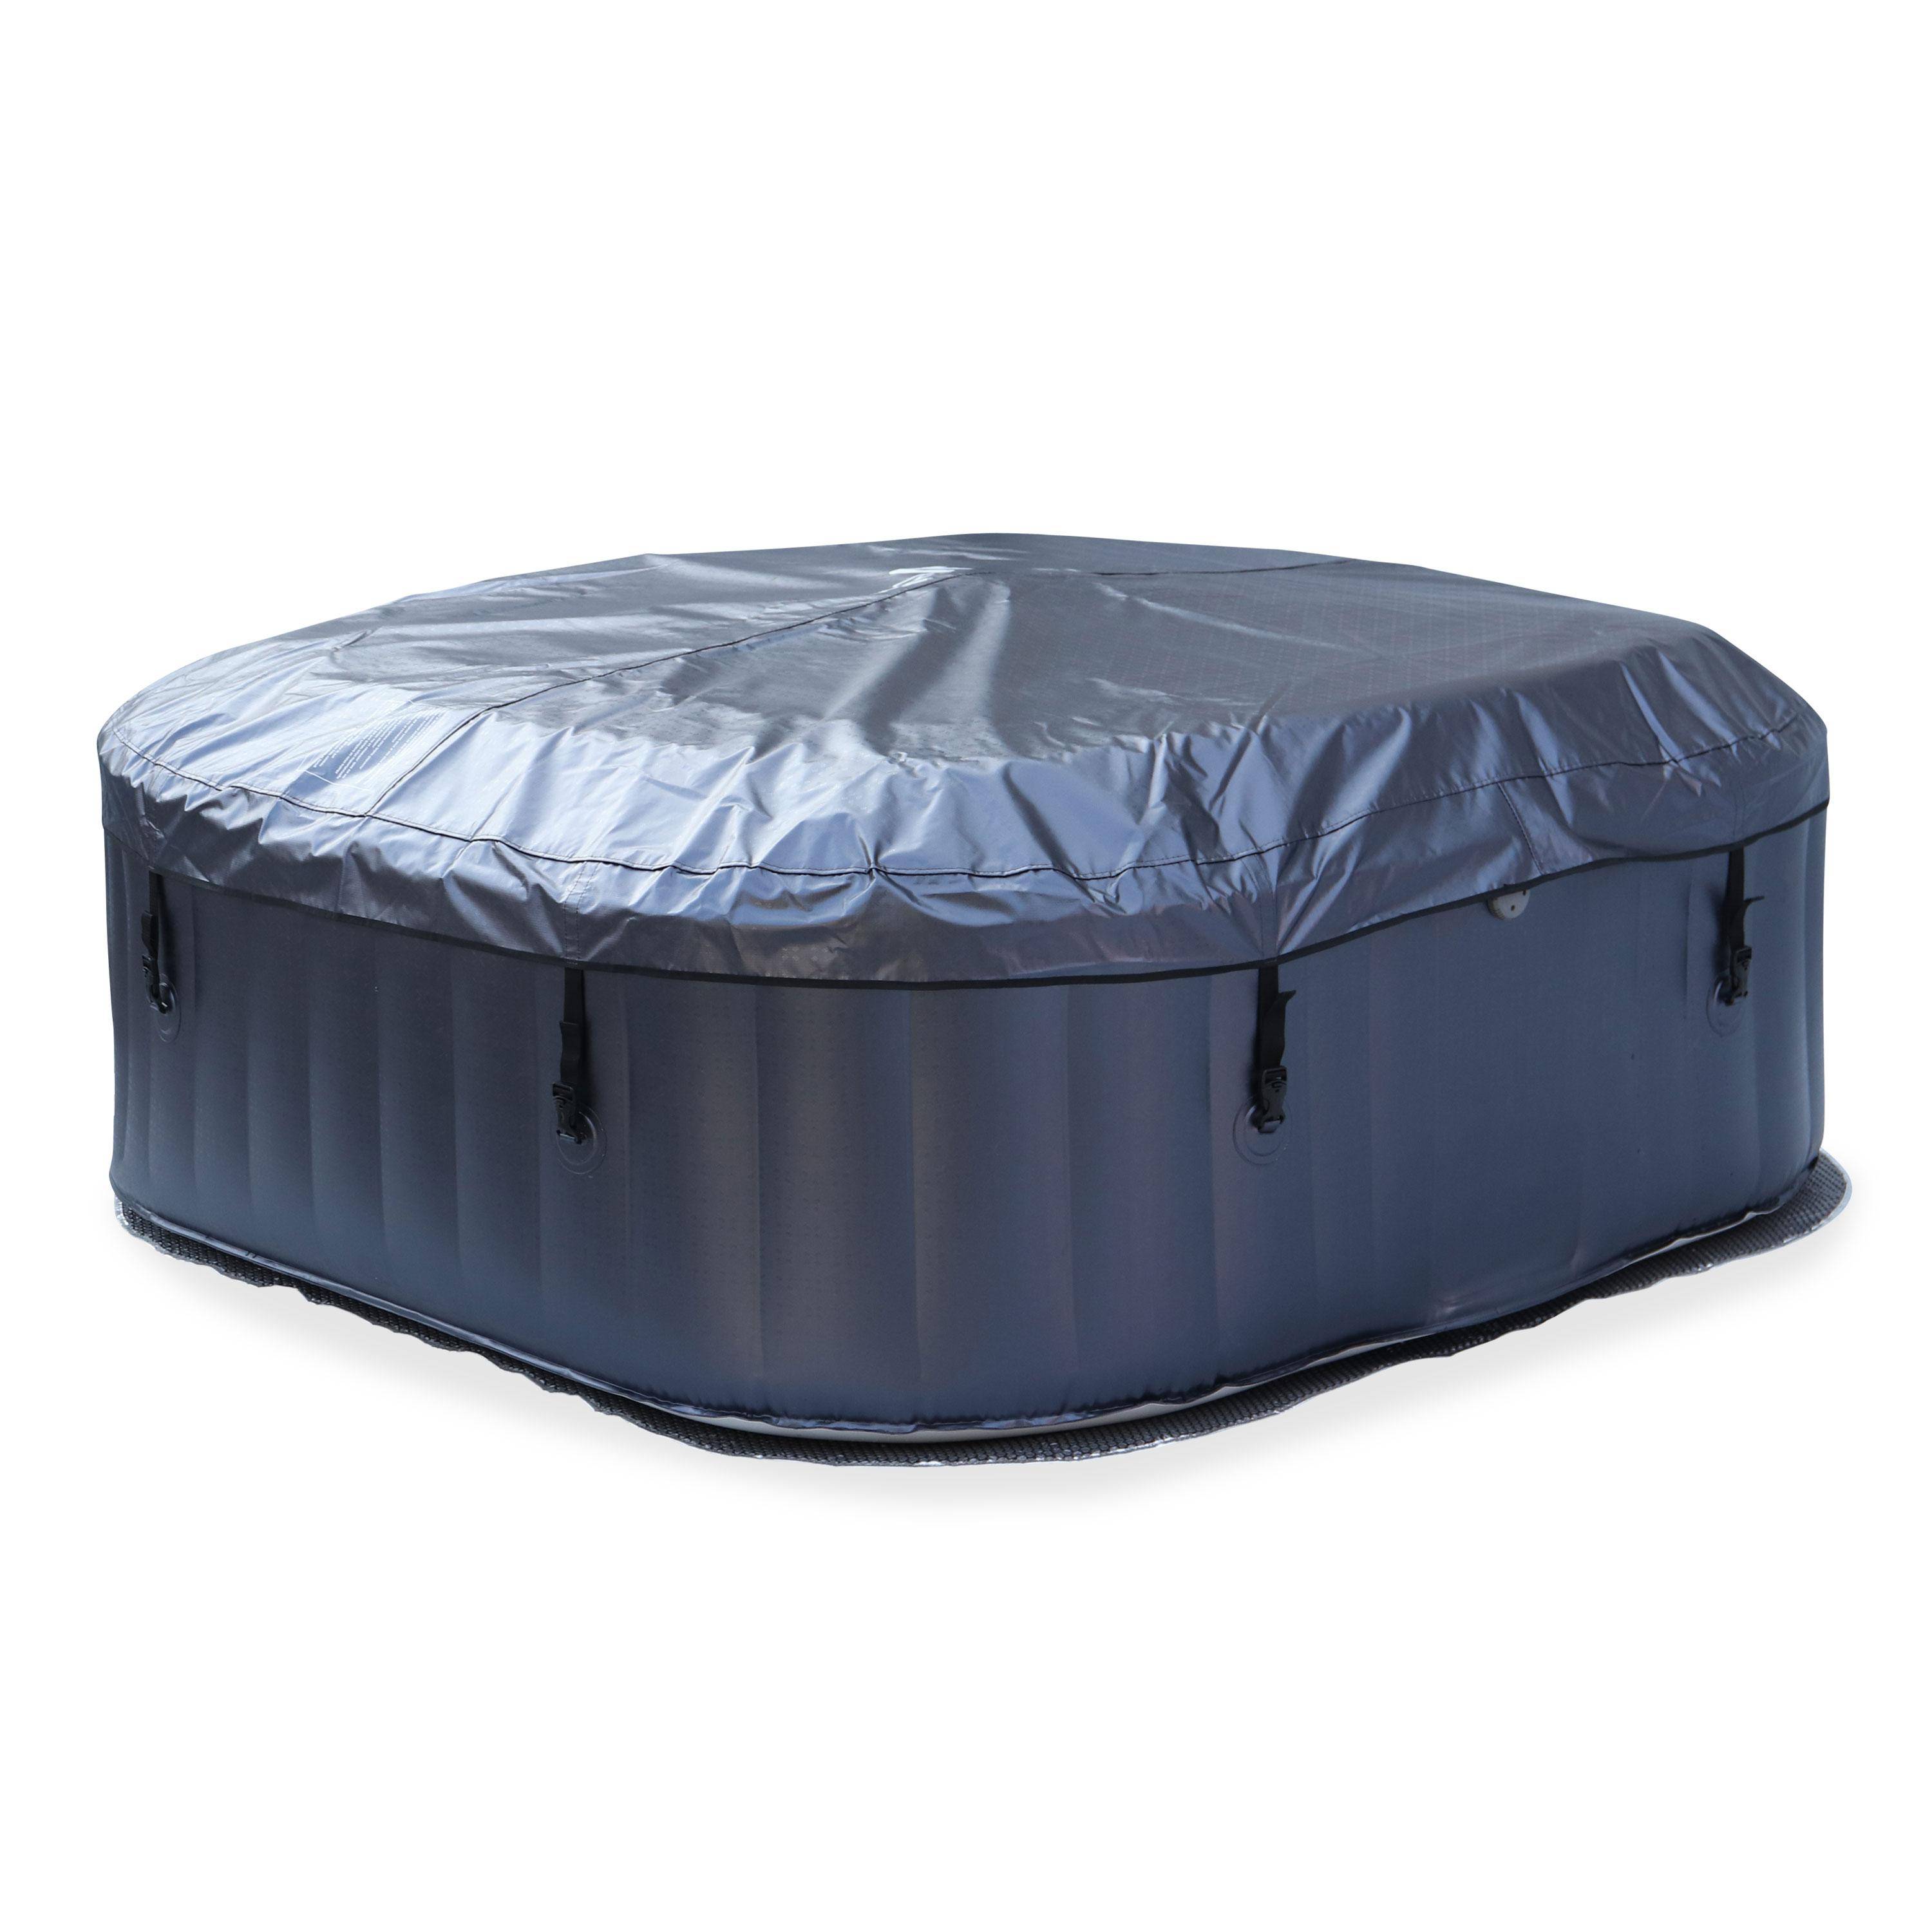  6-person premium square inflatable hot tub MSpa - 185cm, PVC, pump, heating, self-inflating, massage hydrojets, 2 filter cartridges, cover - Otium 6 - Blue,sweeek,Photo5